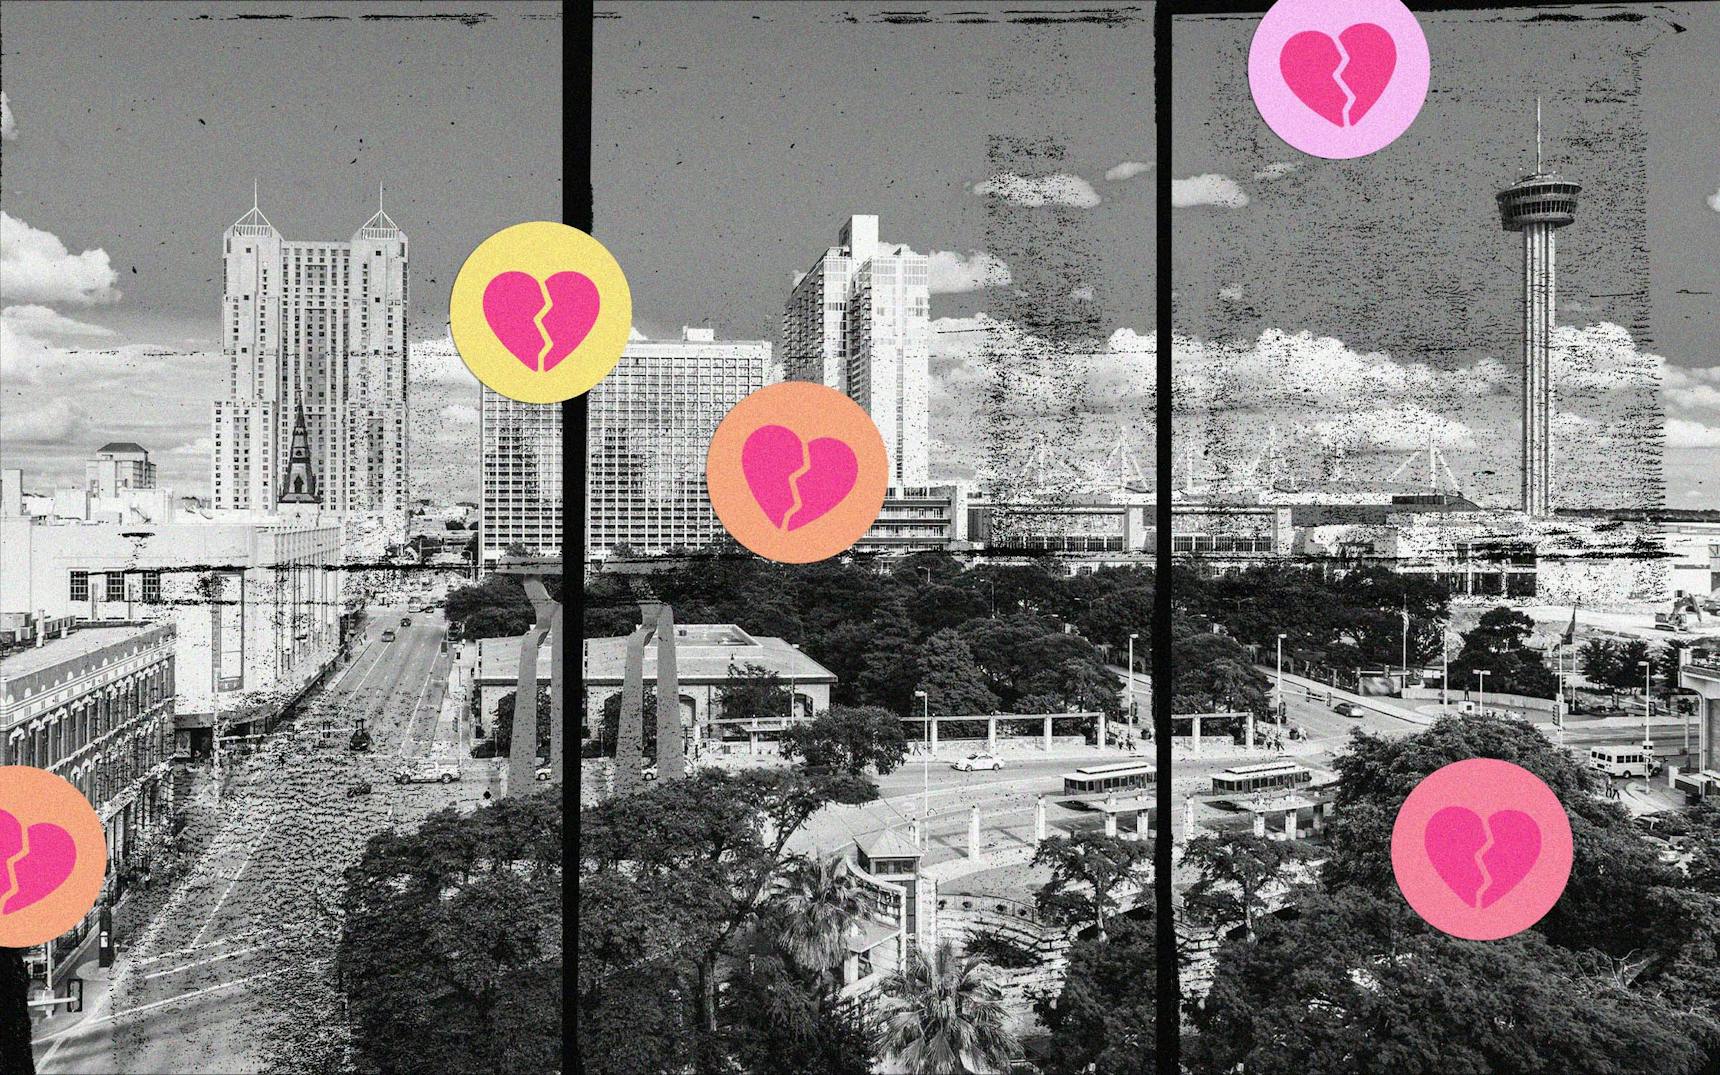 San Antonio Seems to Be Going Through It This Valentine’s Day